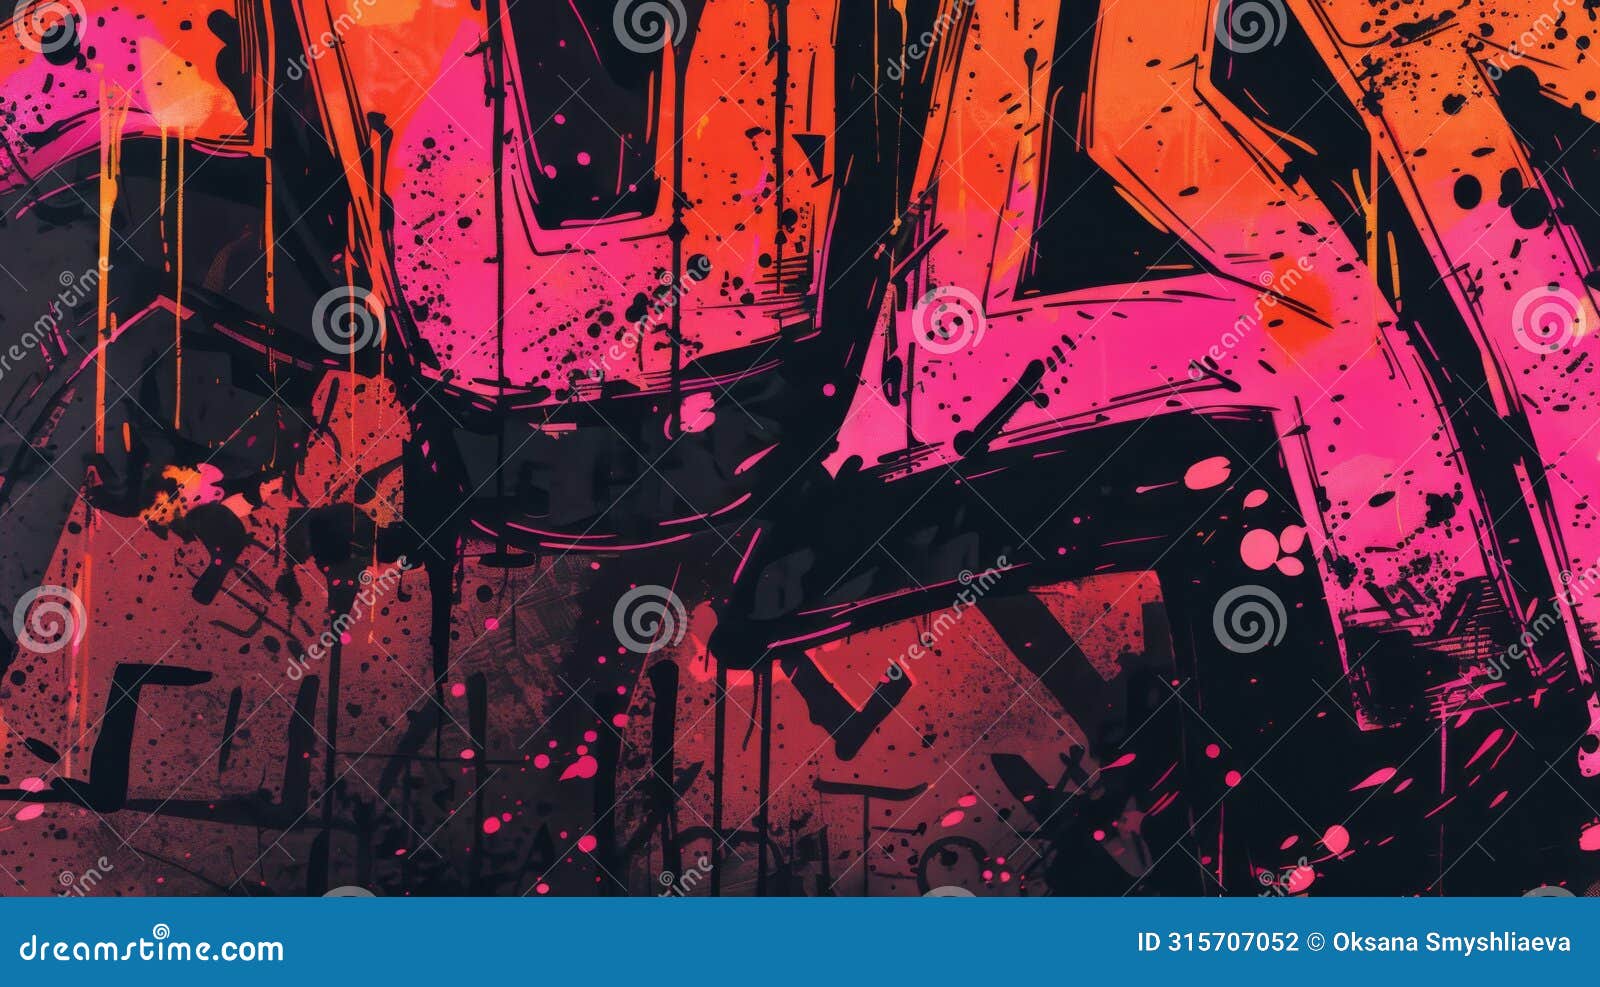 vibrant abstract urban graffiti artwork